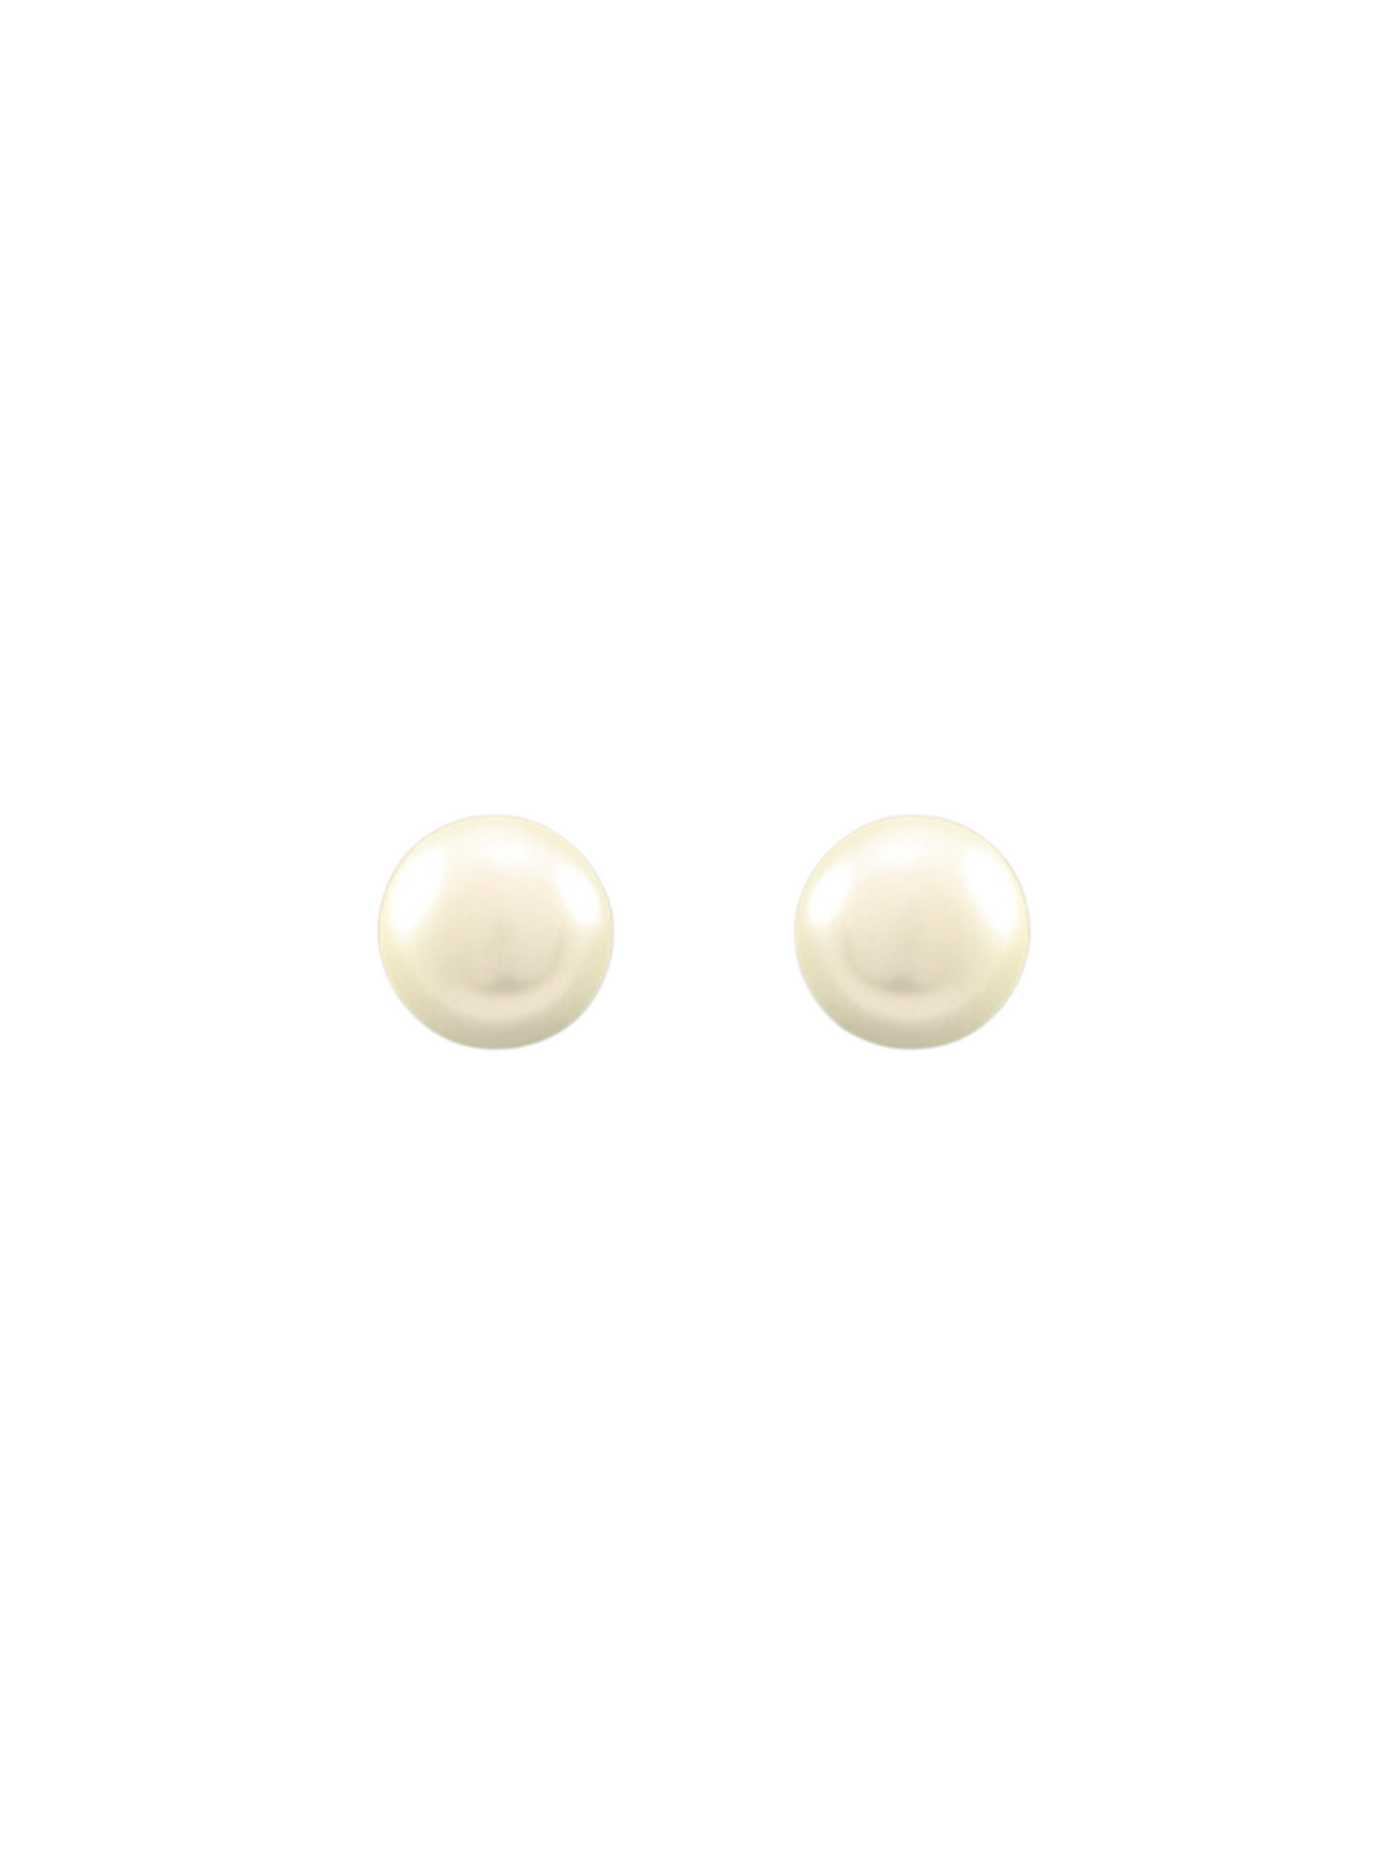 10mm Flat Back Pearl Stud Earrings on white background.